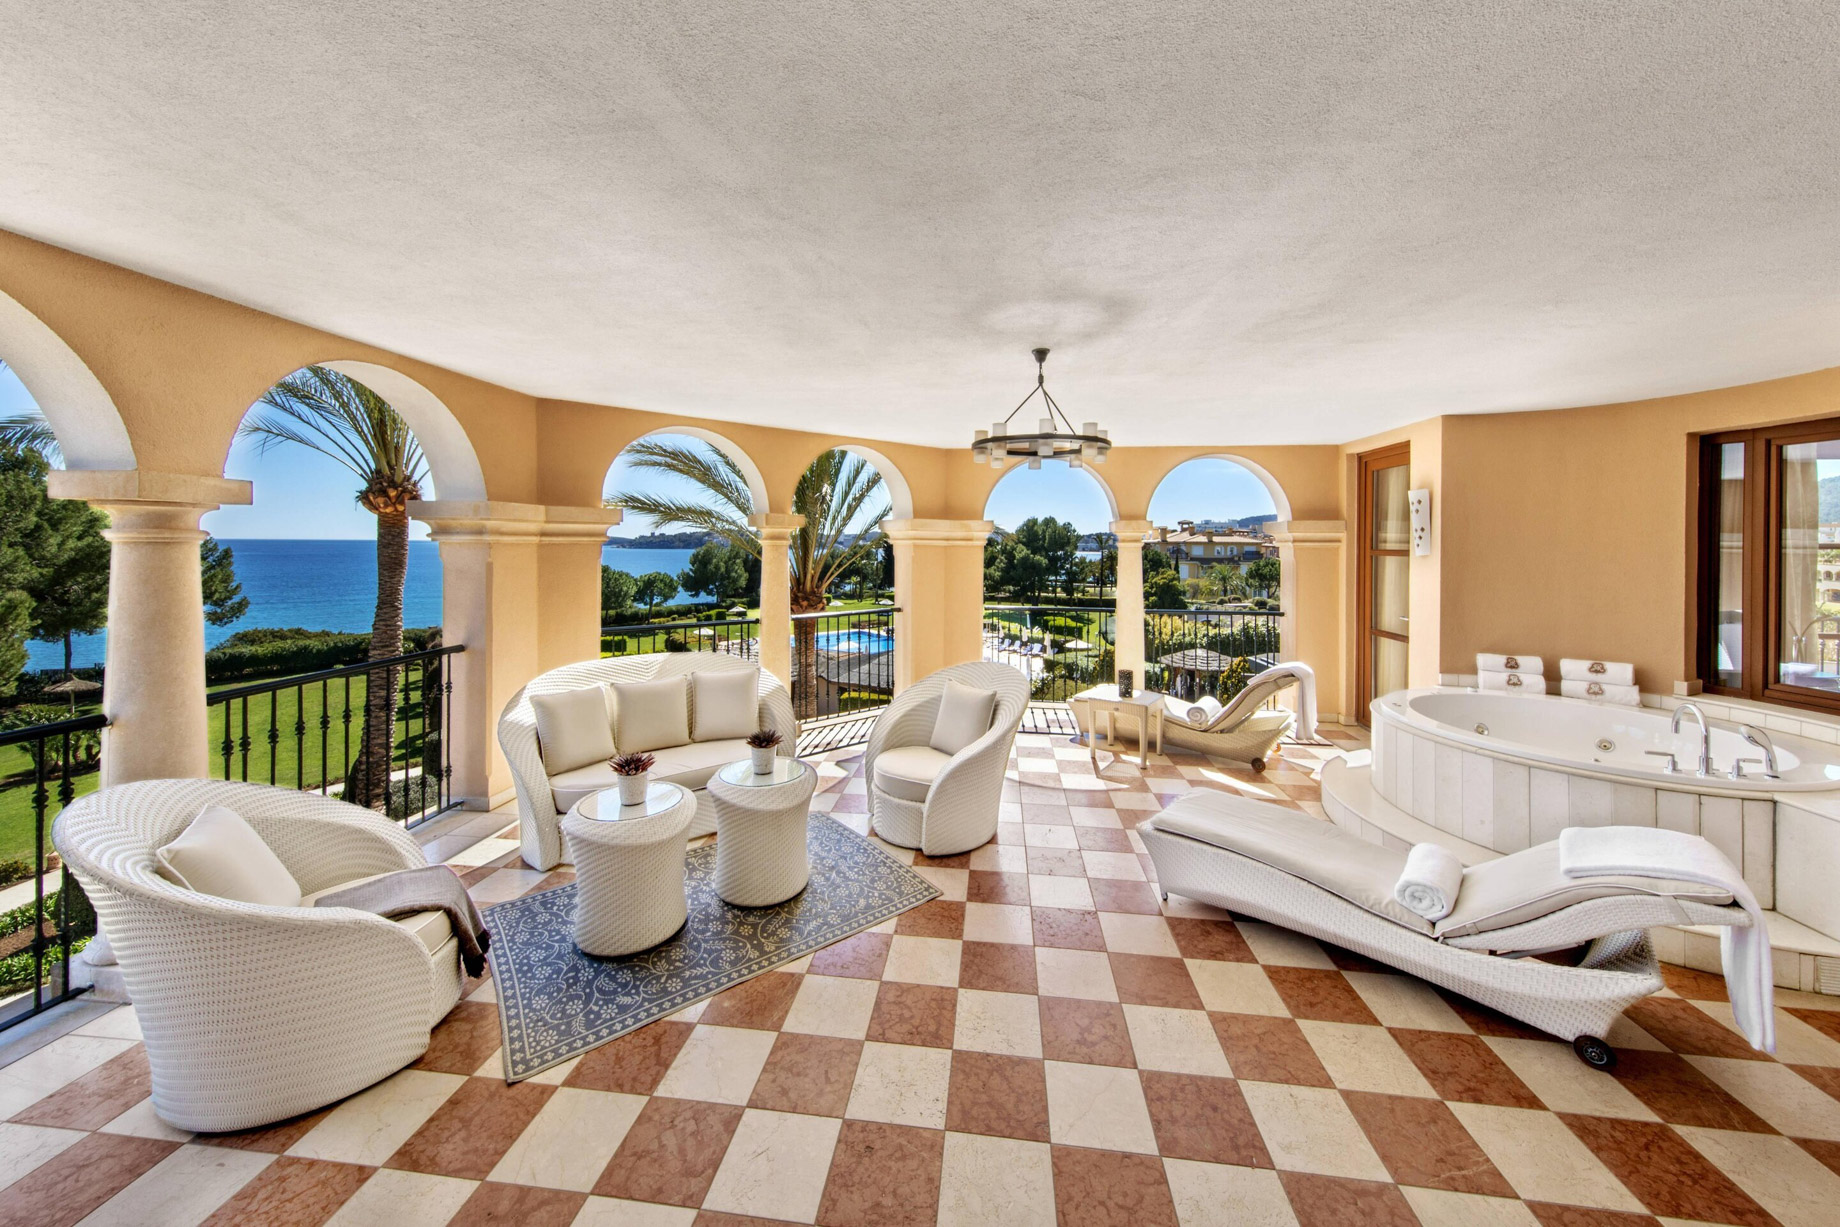 The St. Regis Mardavall Mallorca Resort – Palma de Mallorca, Spain – Mardavall Diamond Suite Terrace